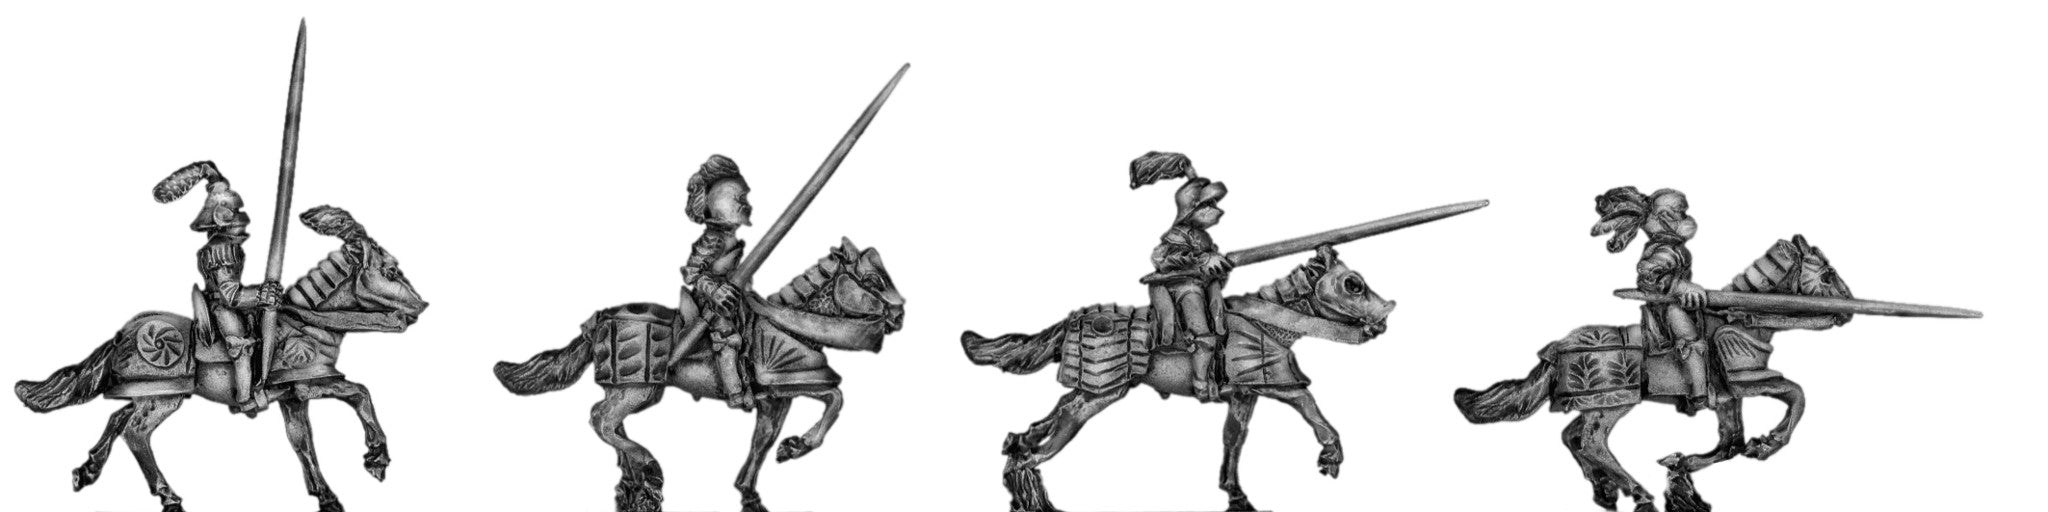 (300MOG09) Men of Grandeur, mounted with lance